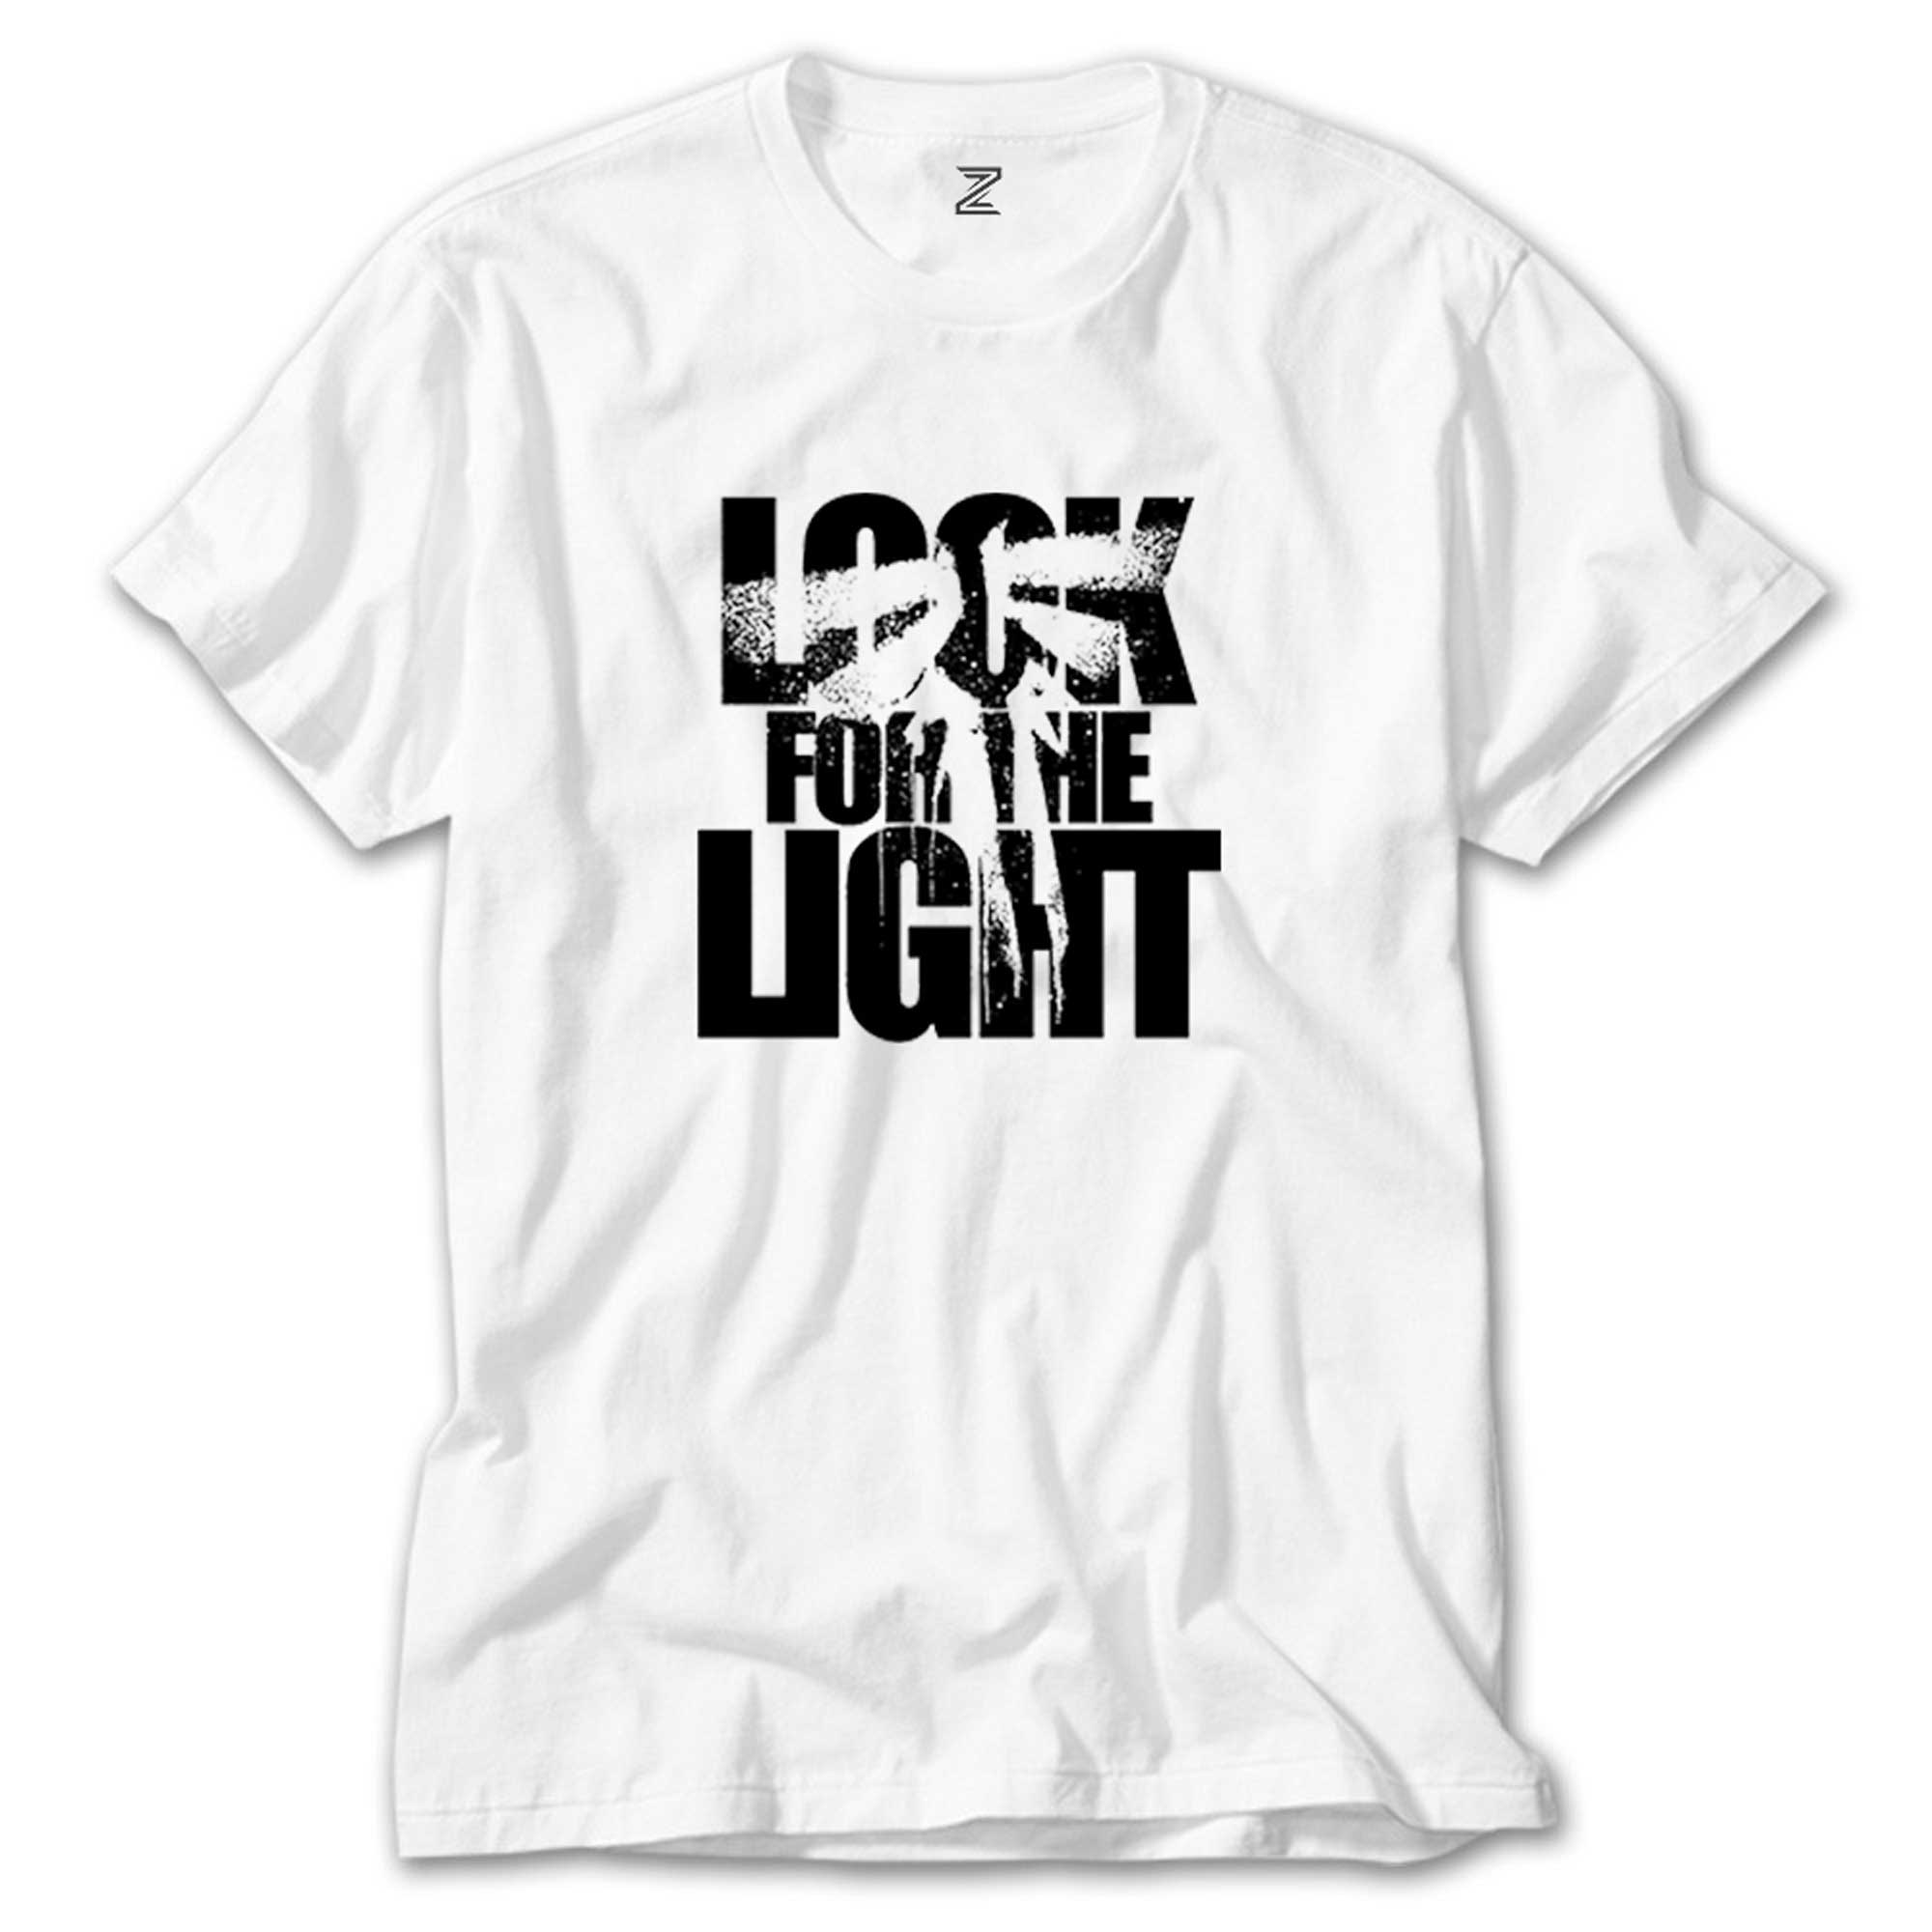 The Last Of Us Look for The Light Text Beyaz Tişört